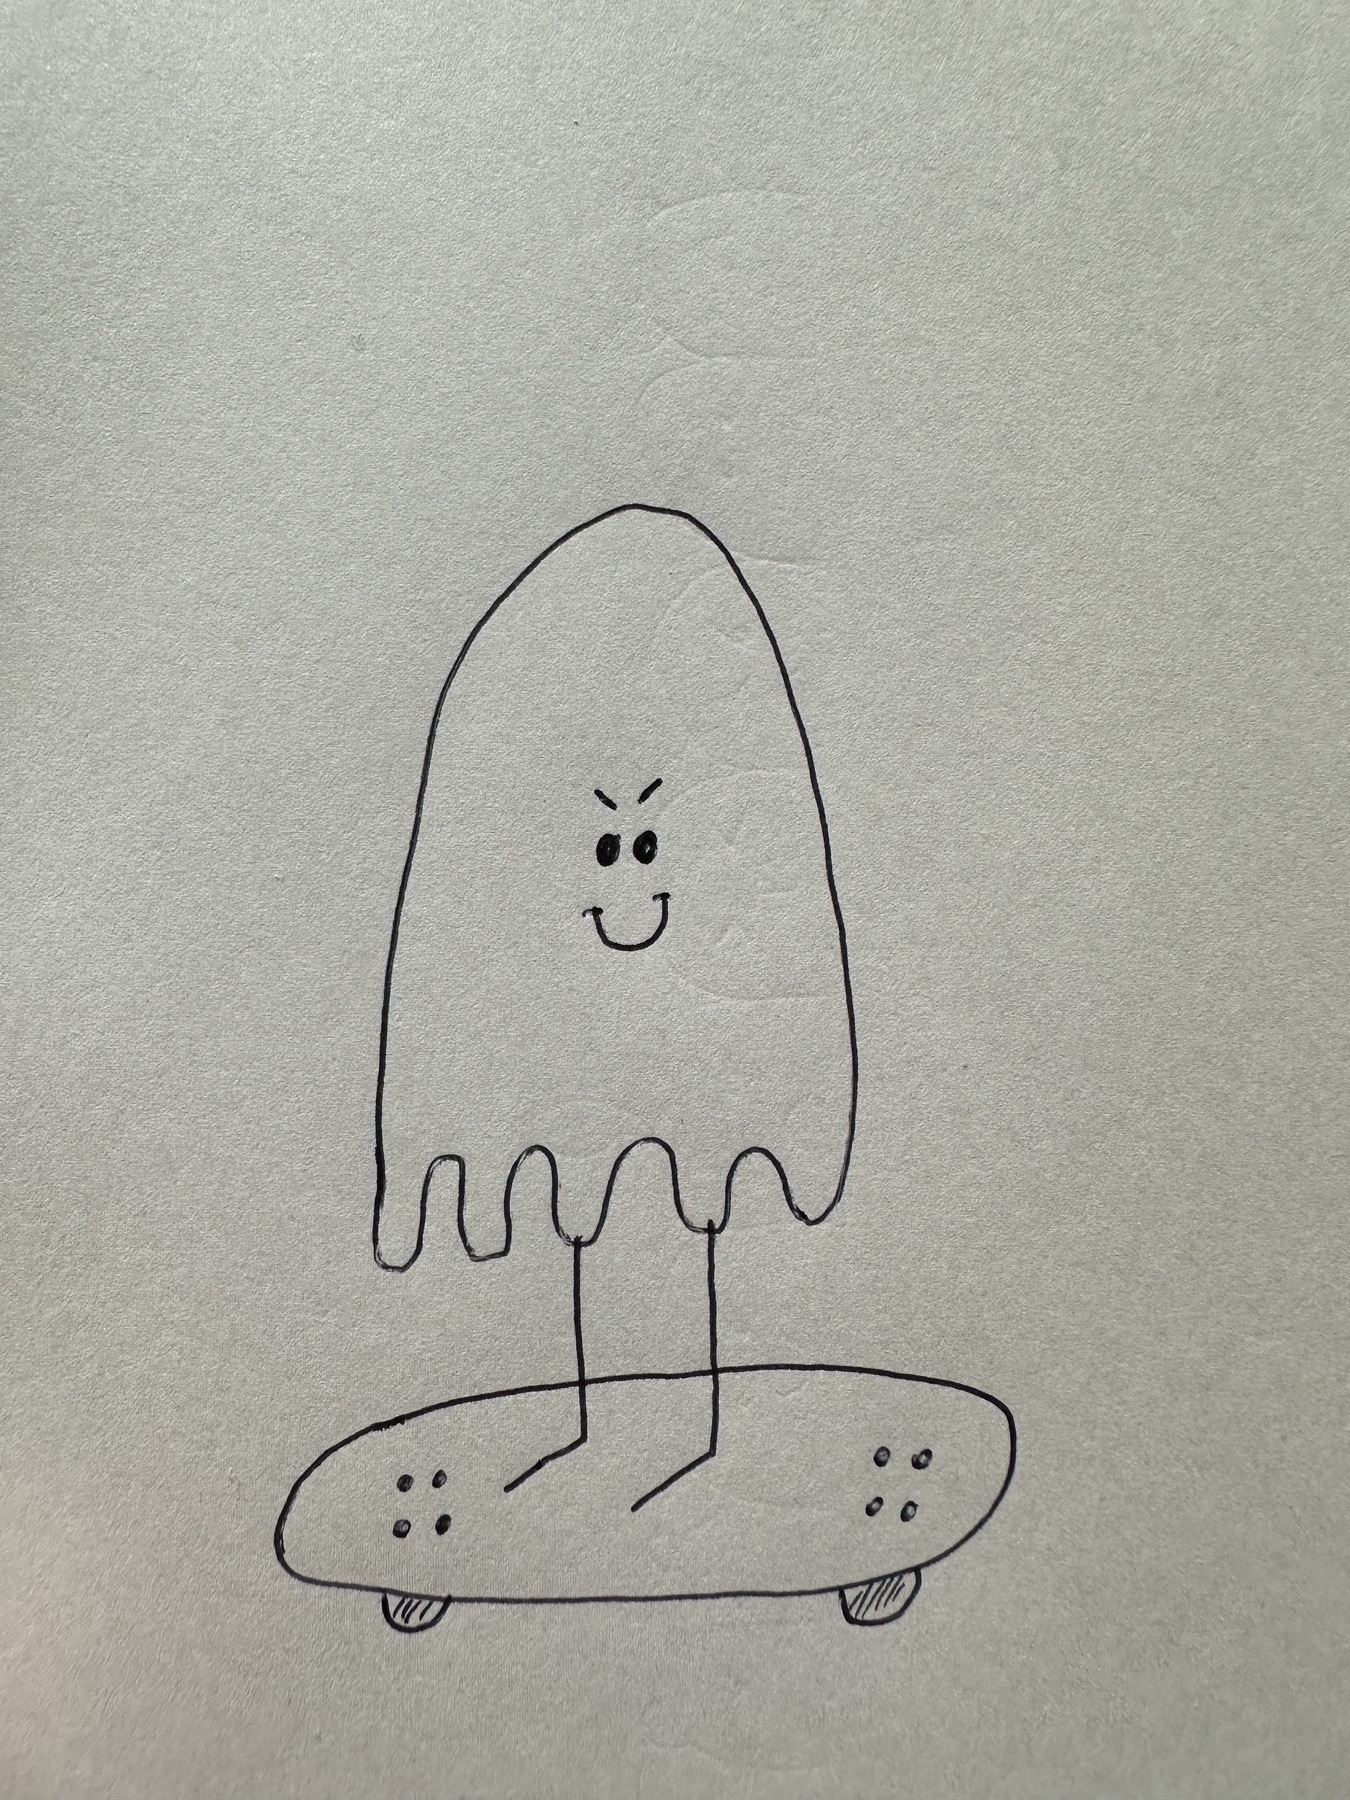 Skateboarding ghost doodle